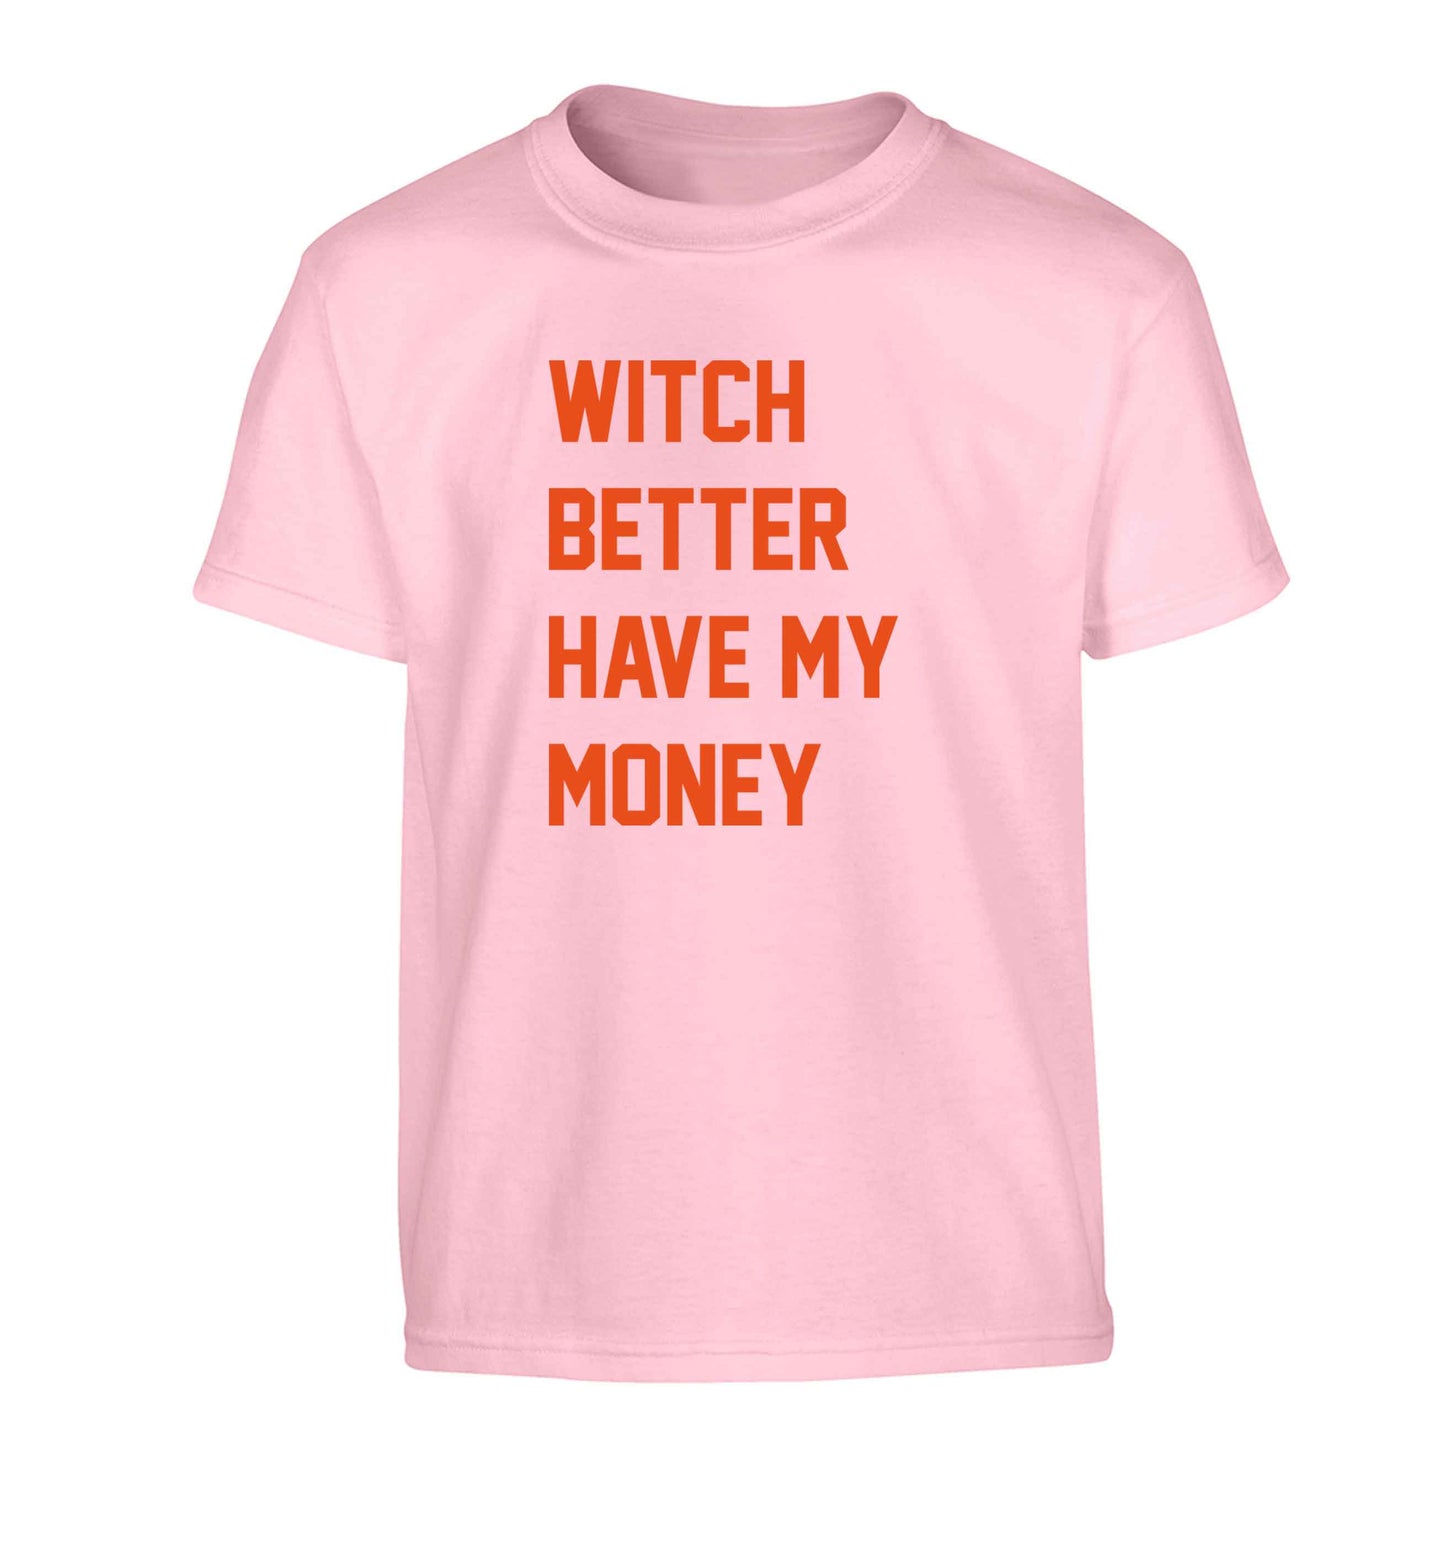 Witch better have my money Children's light pink Tshirt 12-13 Years